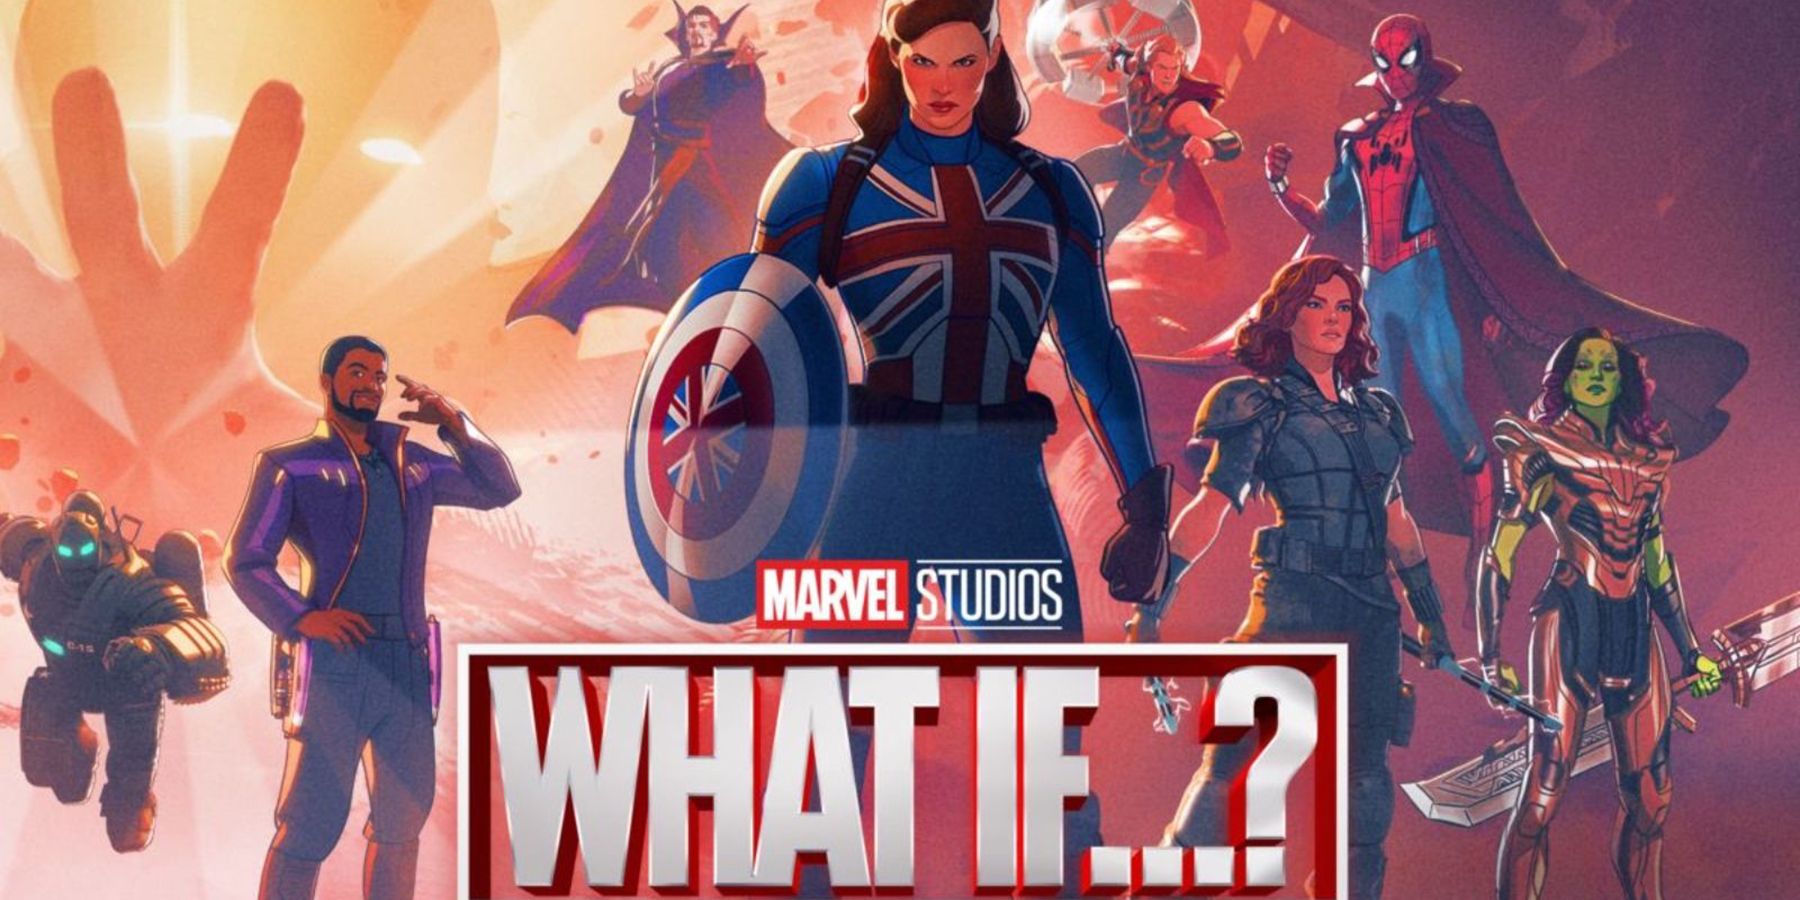 Marvel Studios’ Wat als…? Afleveringen waren langer vóór COVID-19